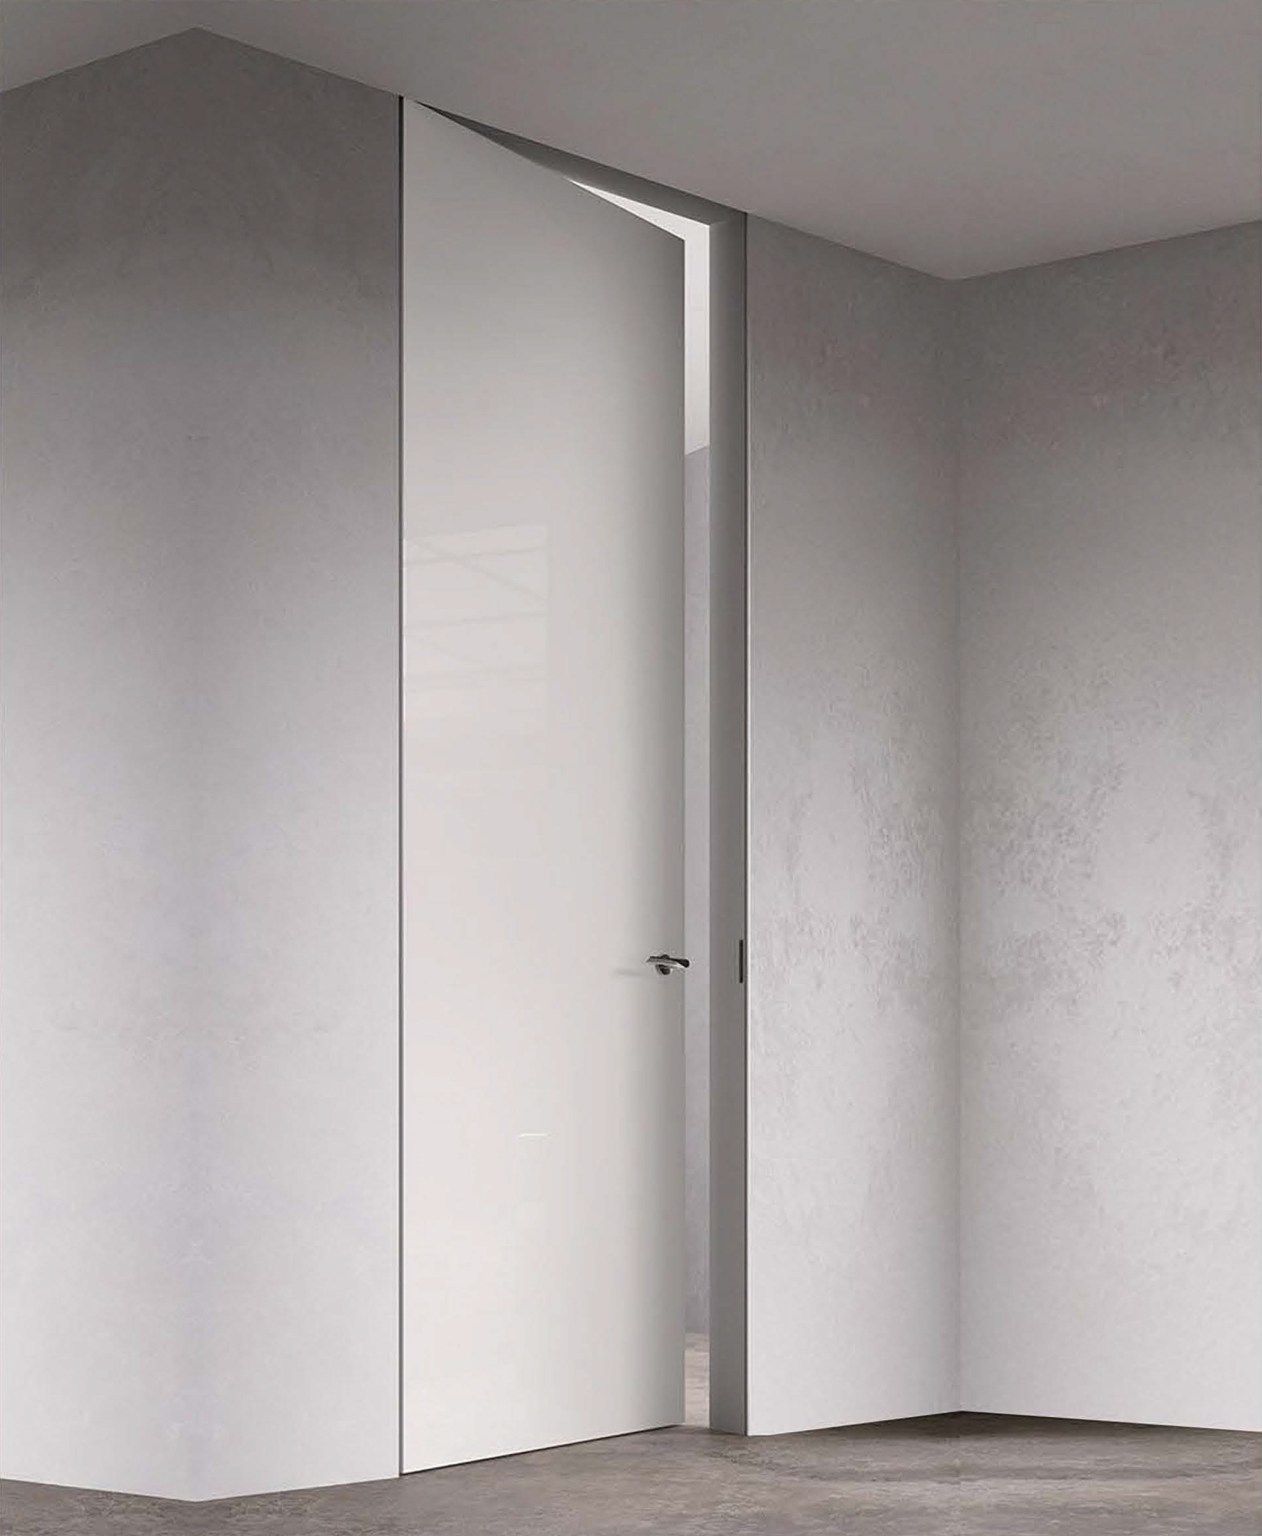 Sleek and Stylish: Flush Door Designs for Modern Interiors